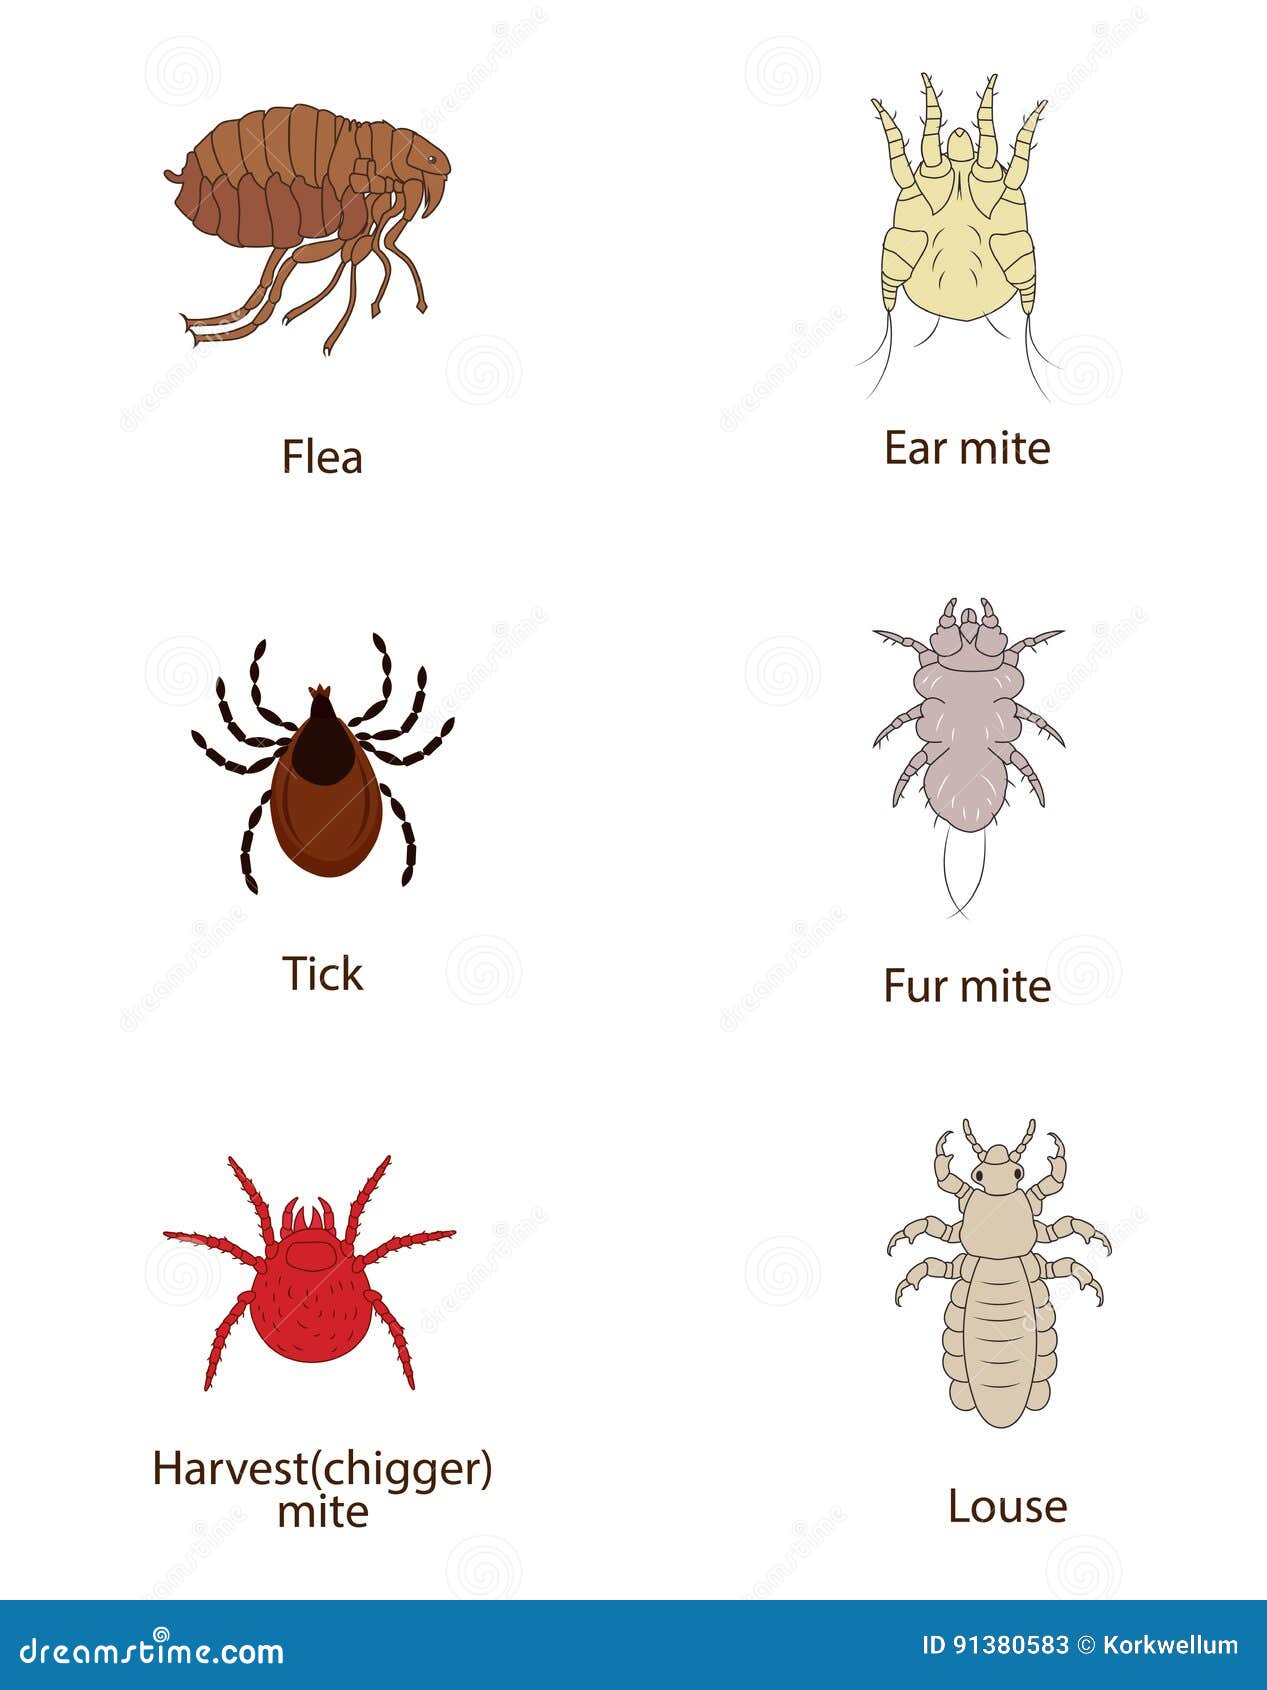 what to know about parasites. skin and fur parasites  set. flea, tick, ear mite, fur mite, harvest mite, louse.